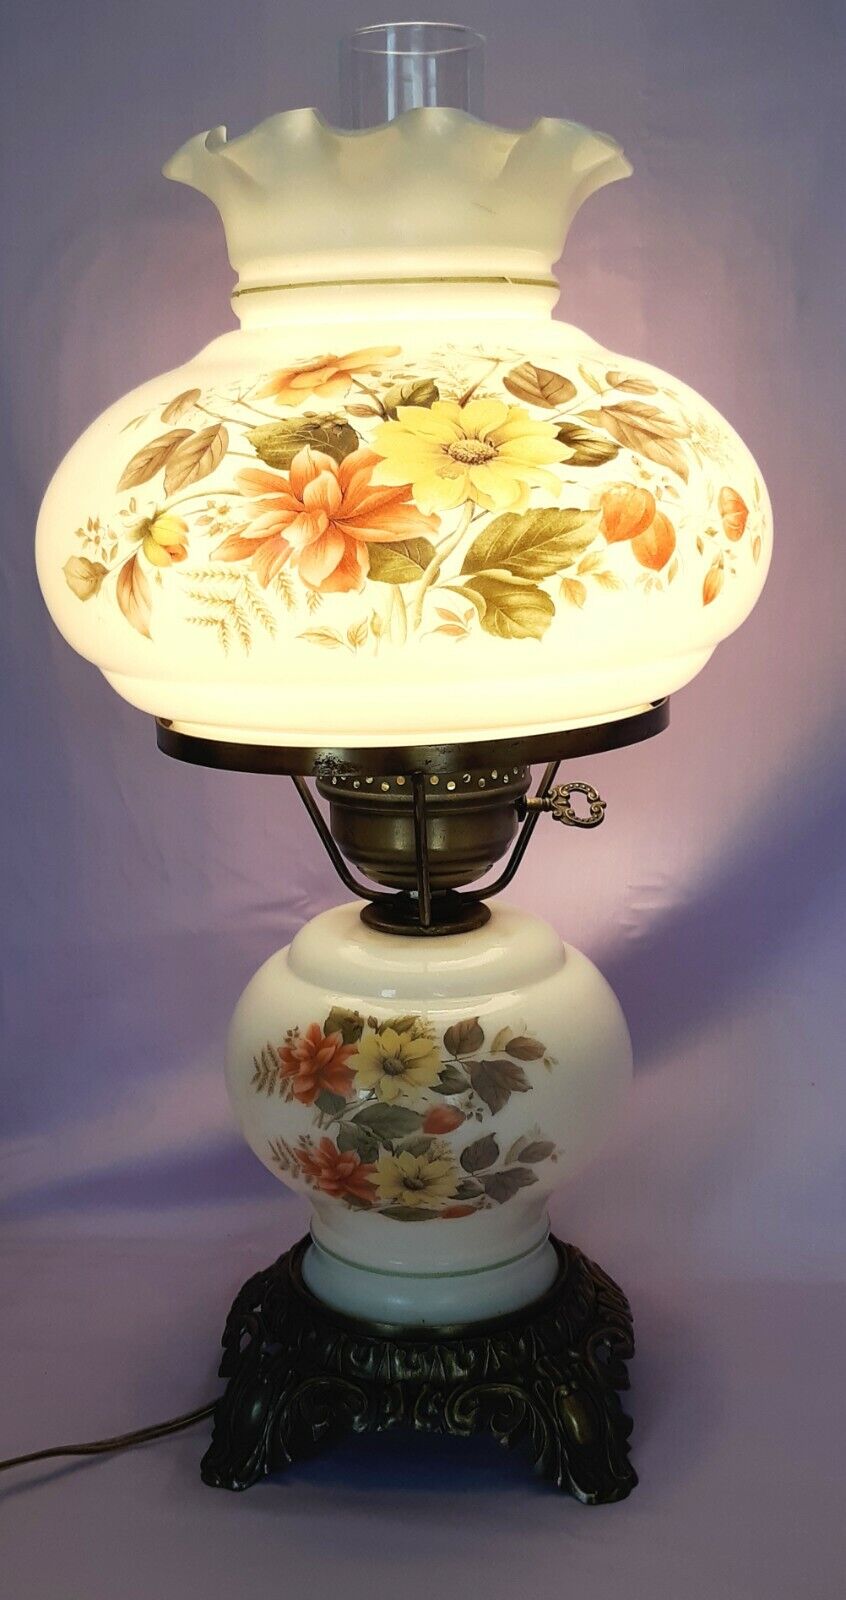 GWTW Style Lamp Milk Glass Globe Shade Painted Wild Flowers 3 Way w/Chimney VTG